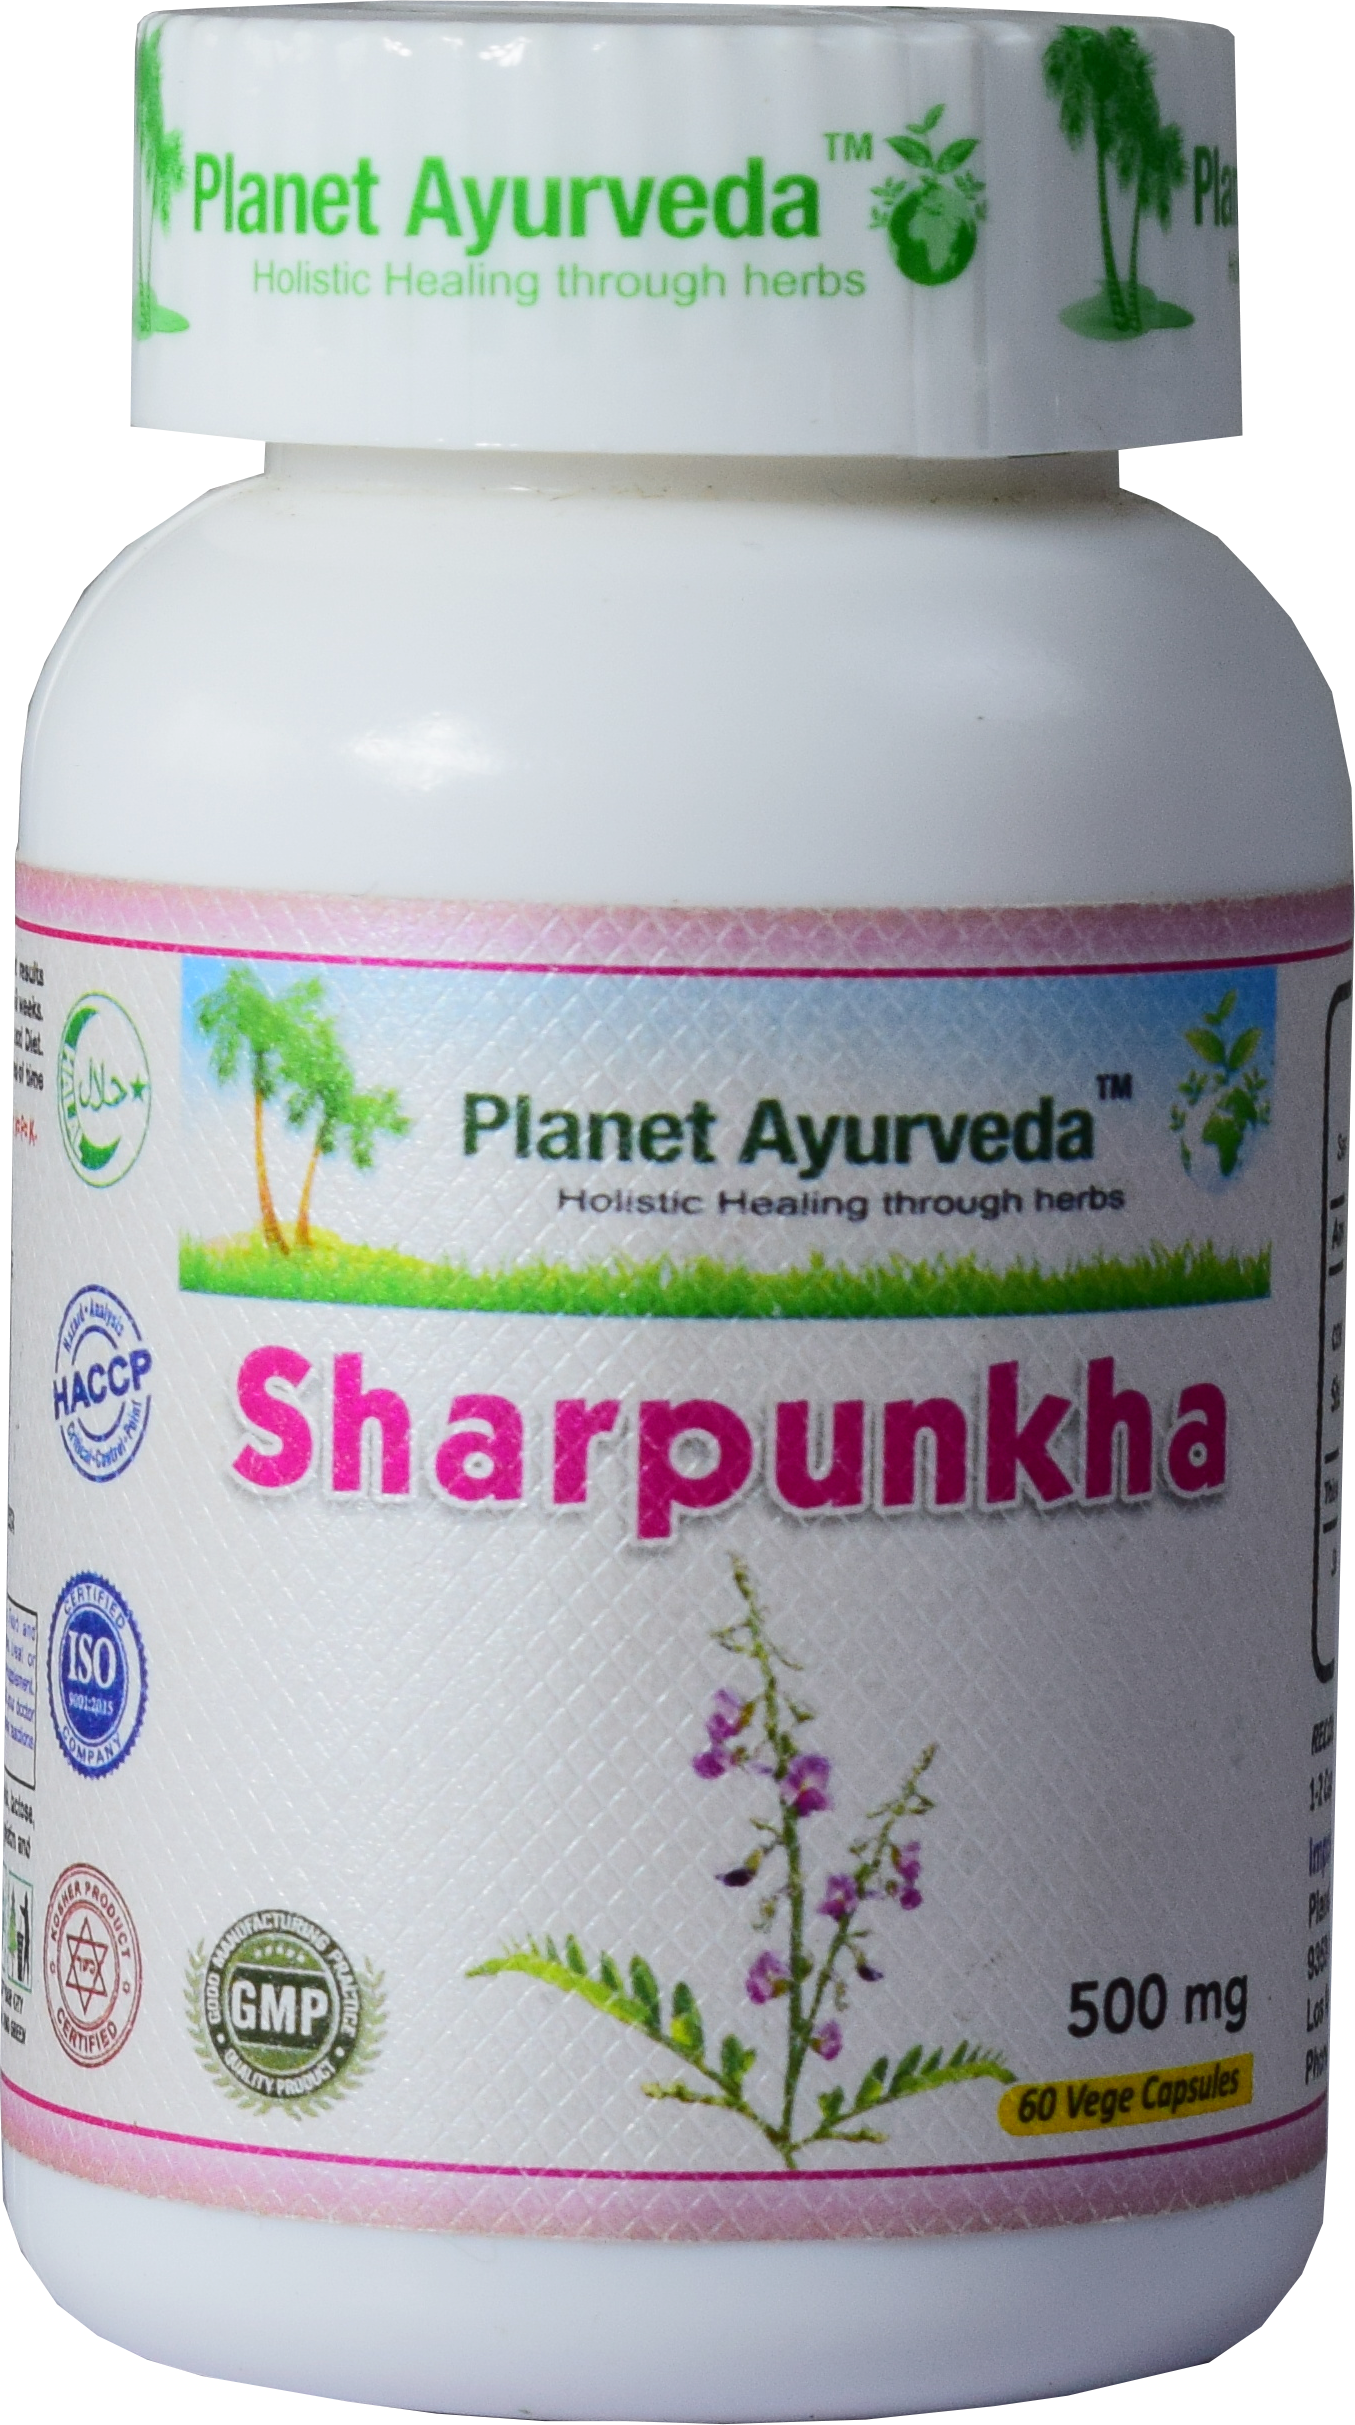 Buy Planet Ayurveda Sharpunkha Capsules at Best Price Online